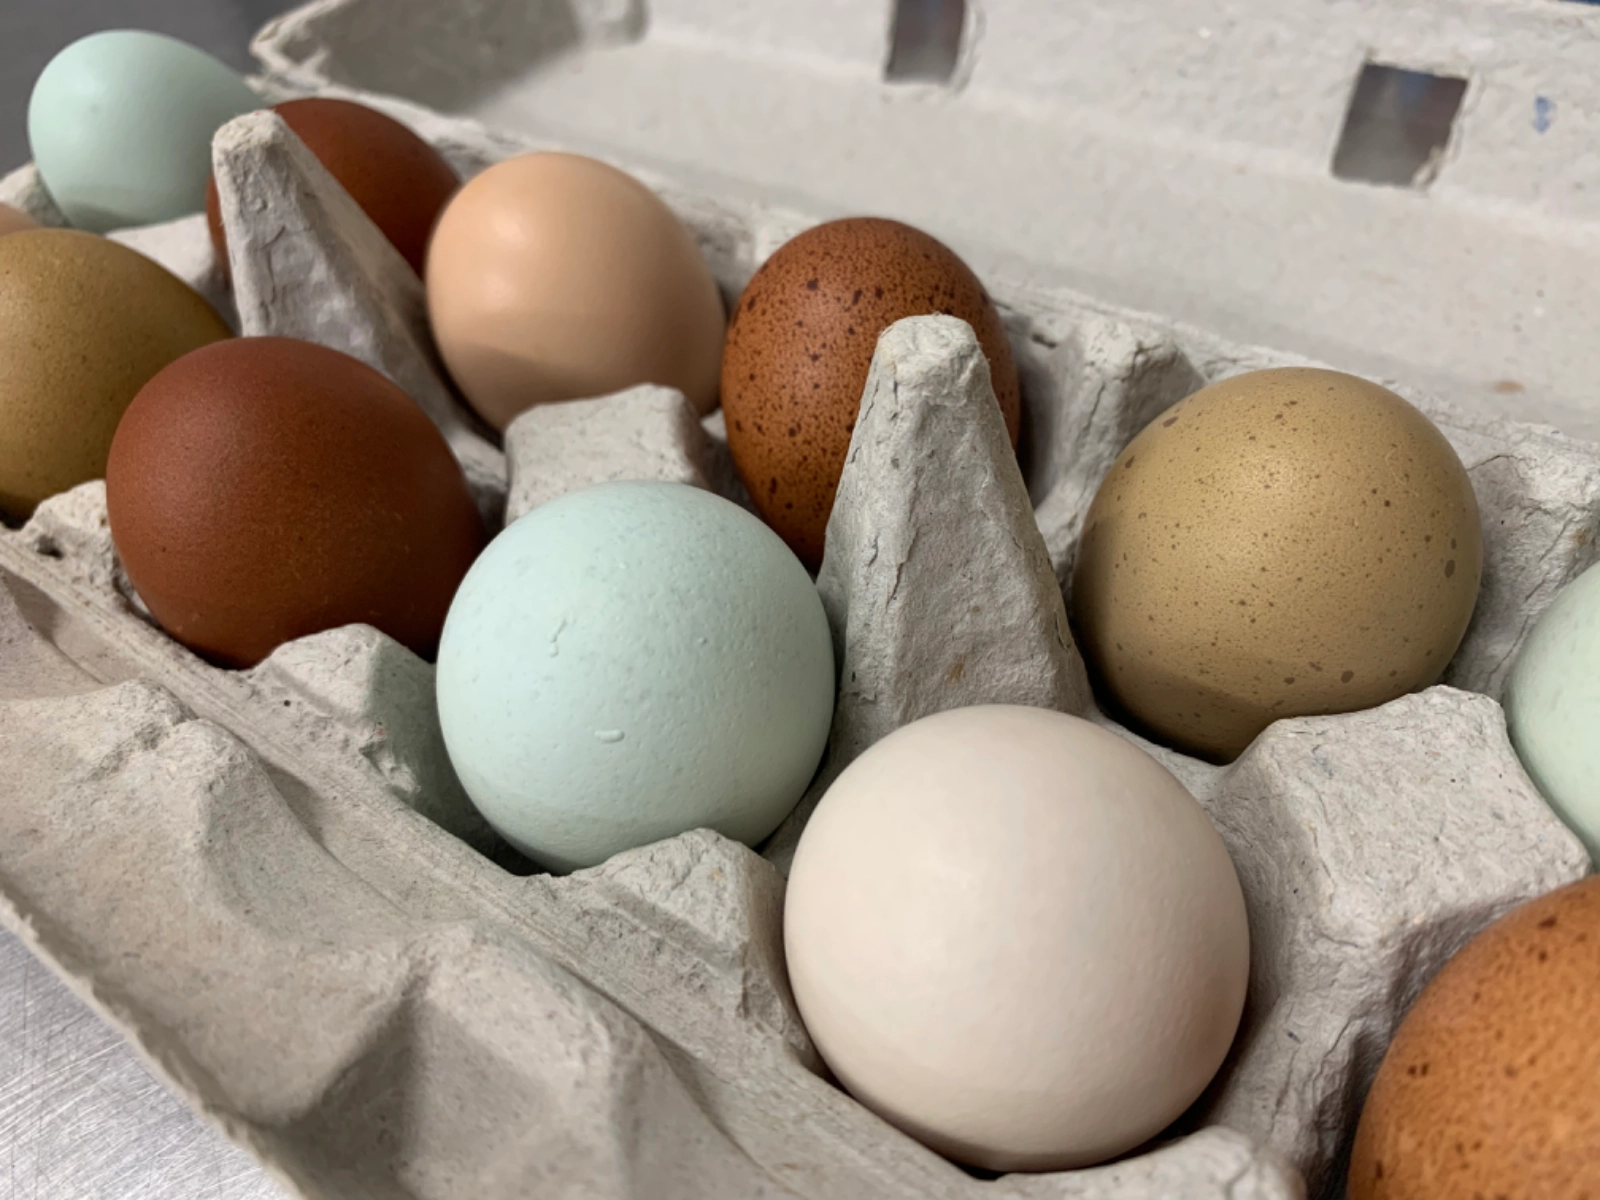 eggs-pastureraised-1-small-pullet-size-dozen